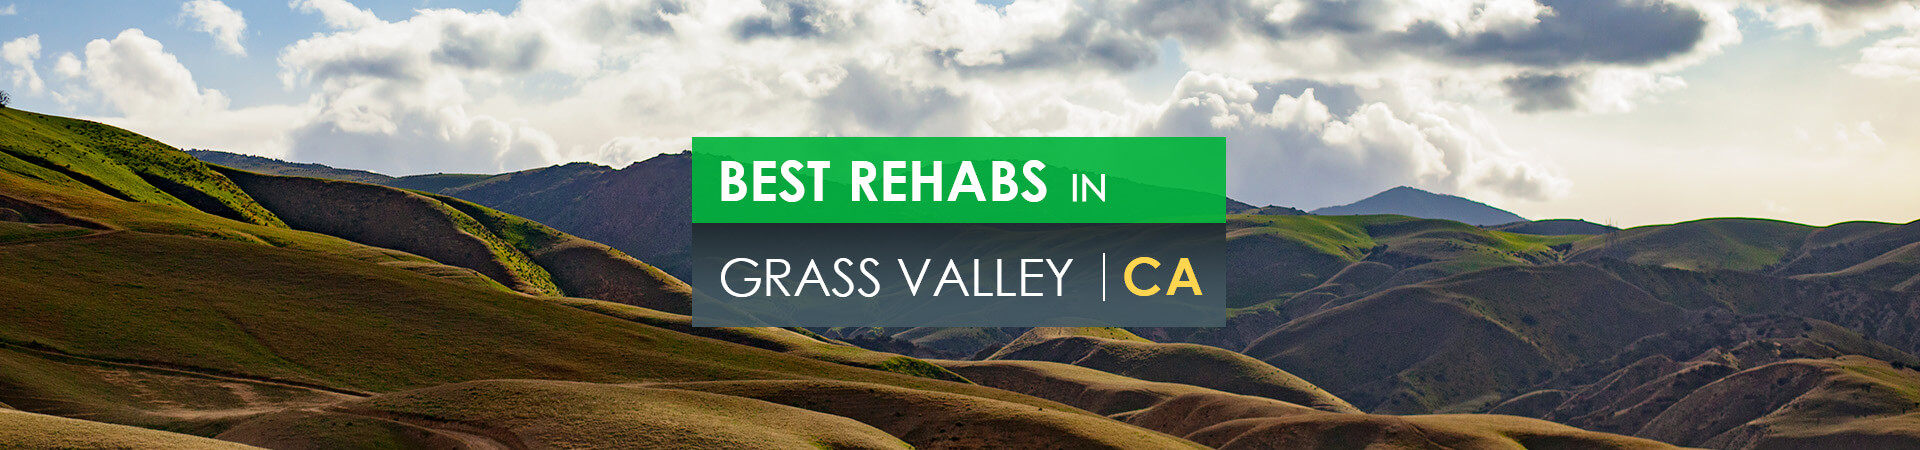 Best rehabs in Grass Valley, CA